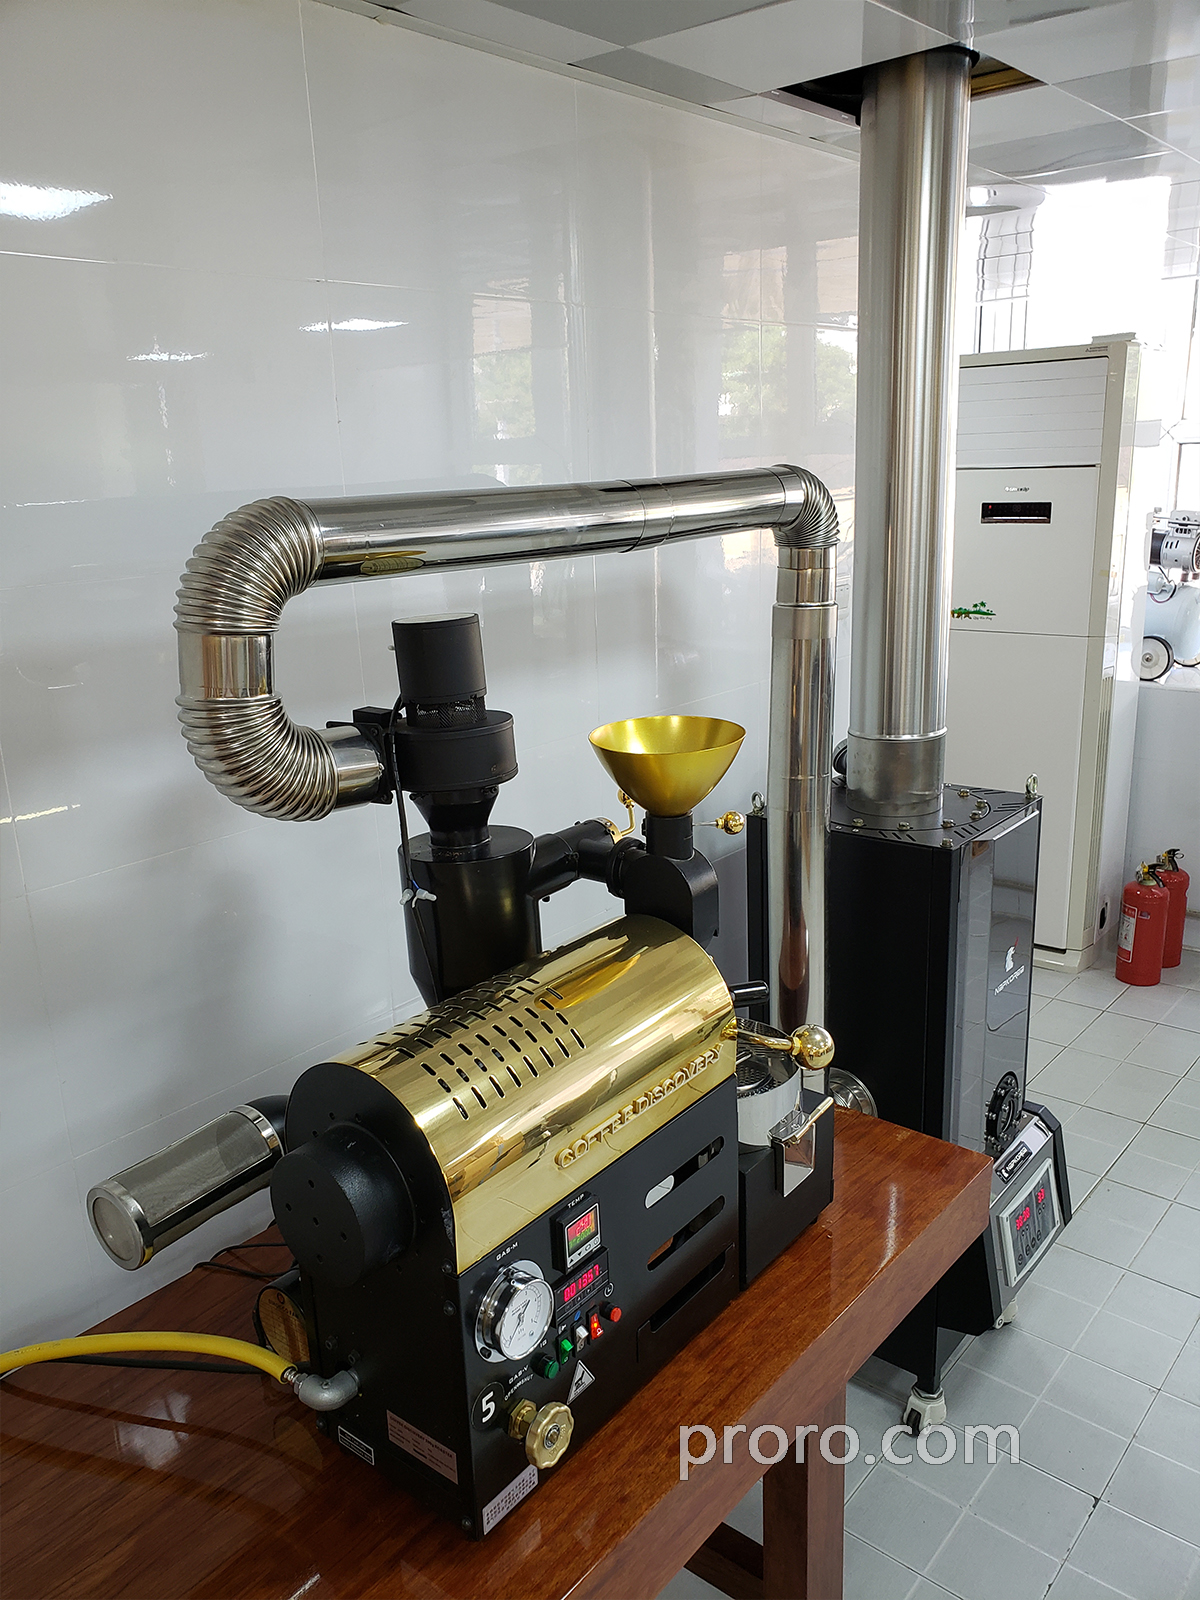  FUJIROYAL 富士皇家 DISCOVERY 小富士咖啡烘焙机 消烟消味 后燃机 安装案例。